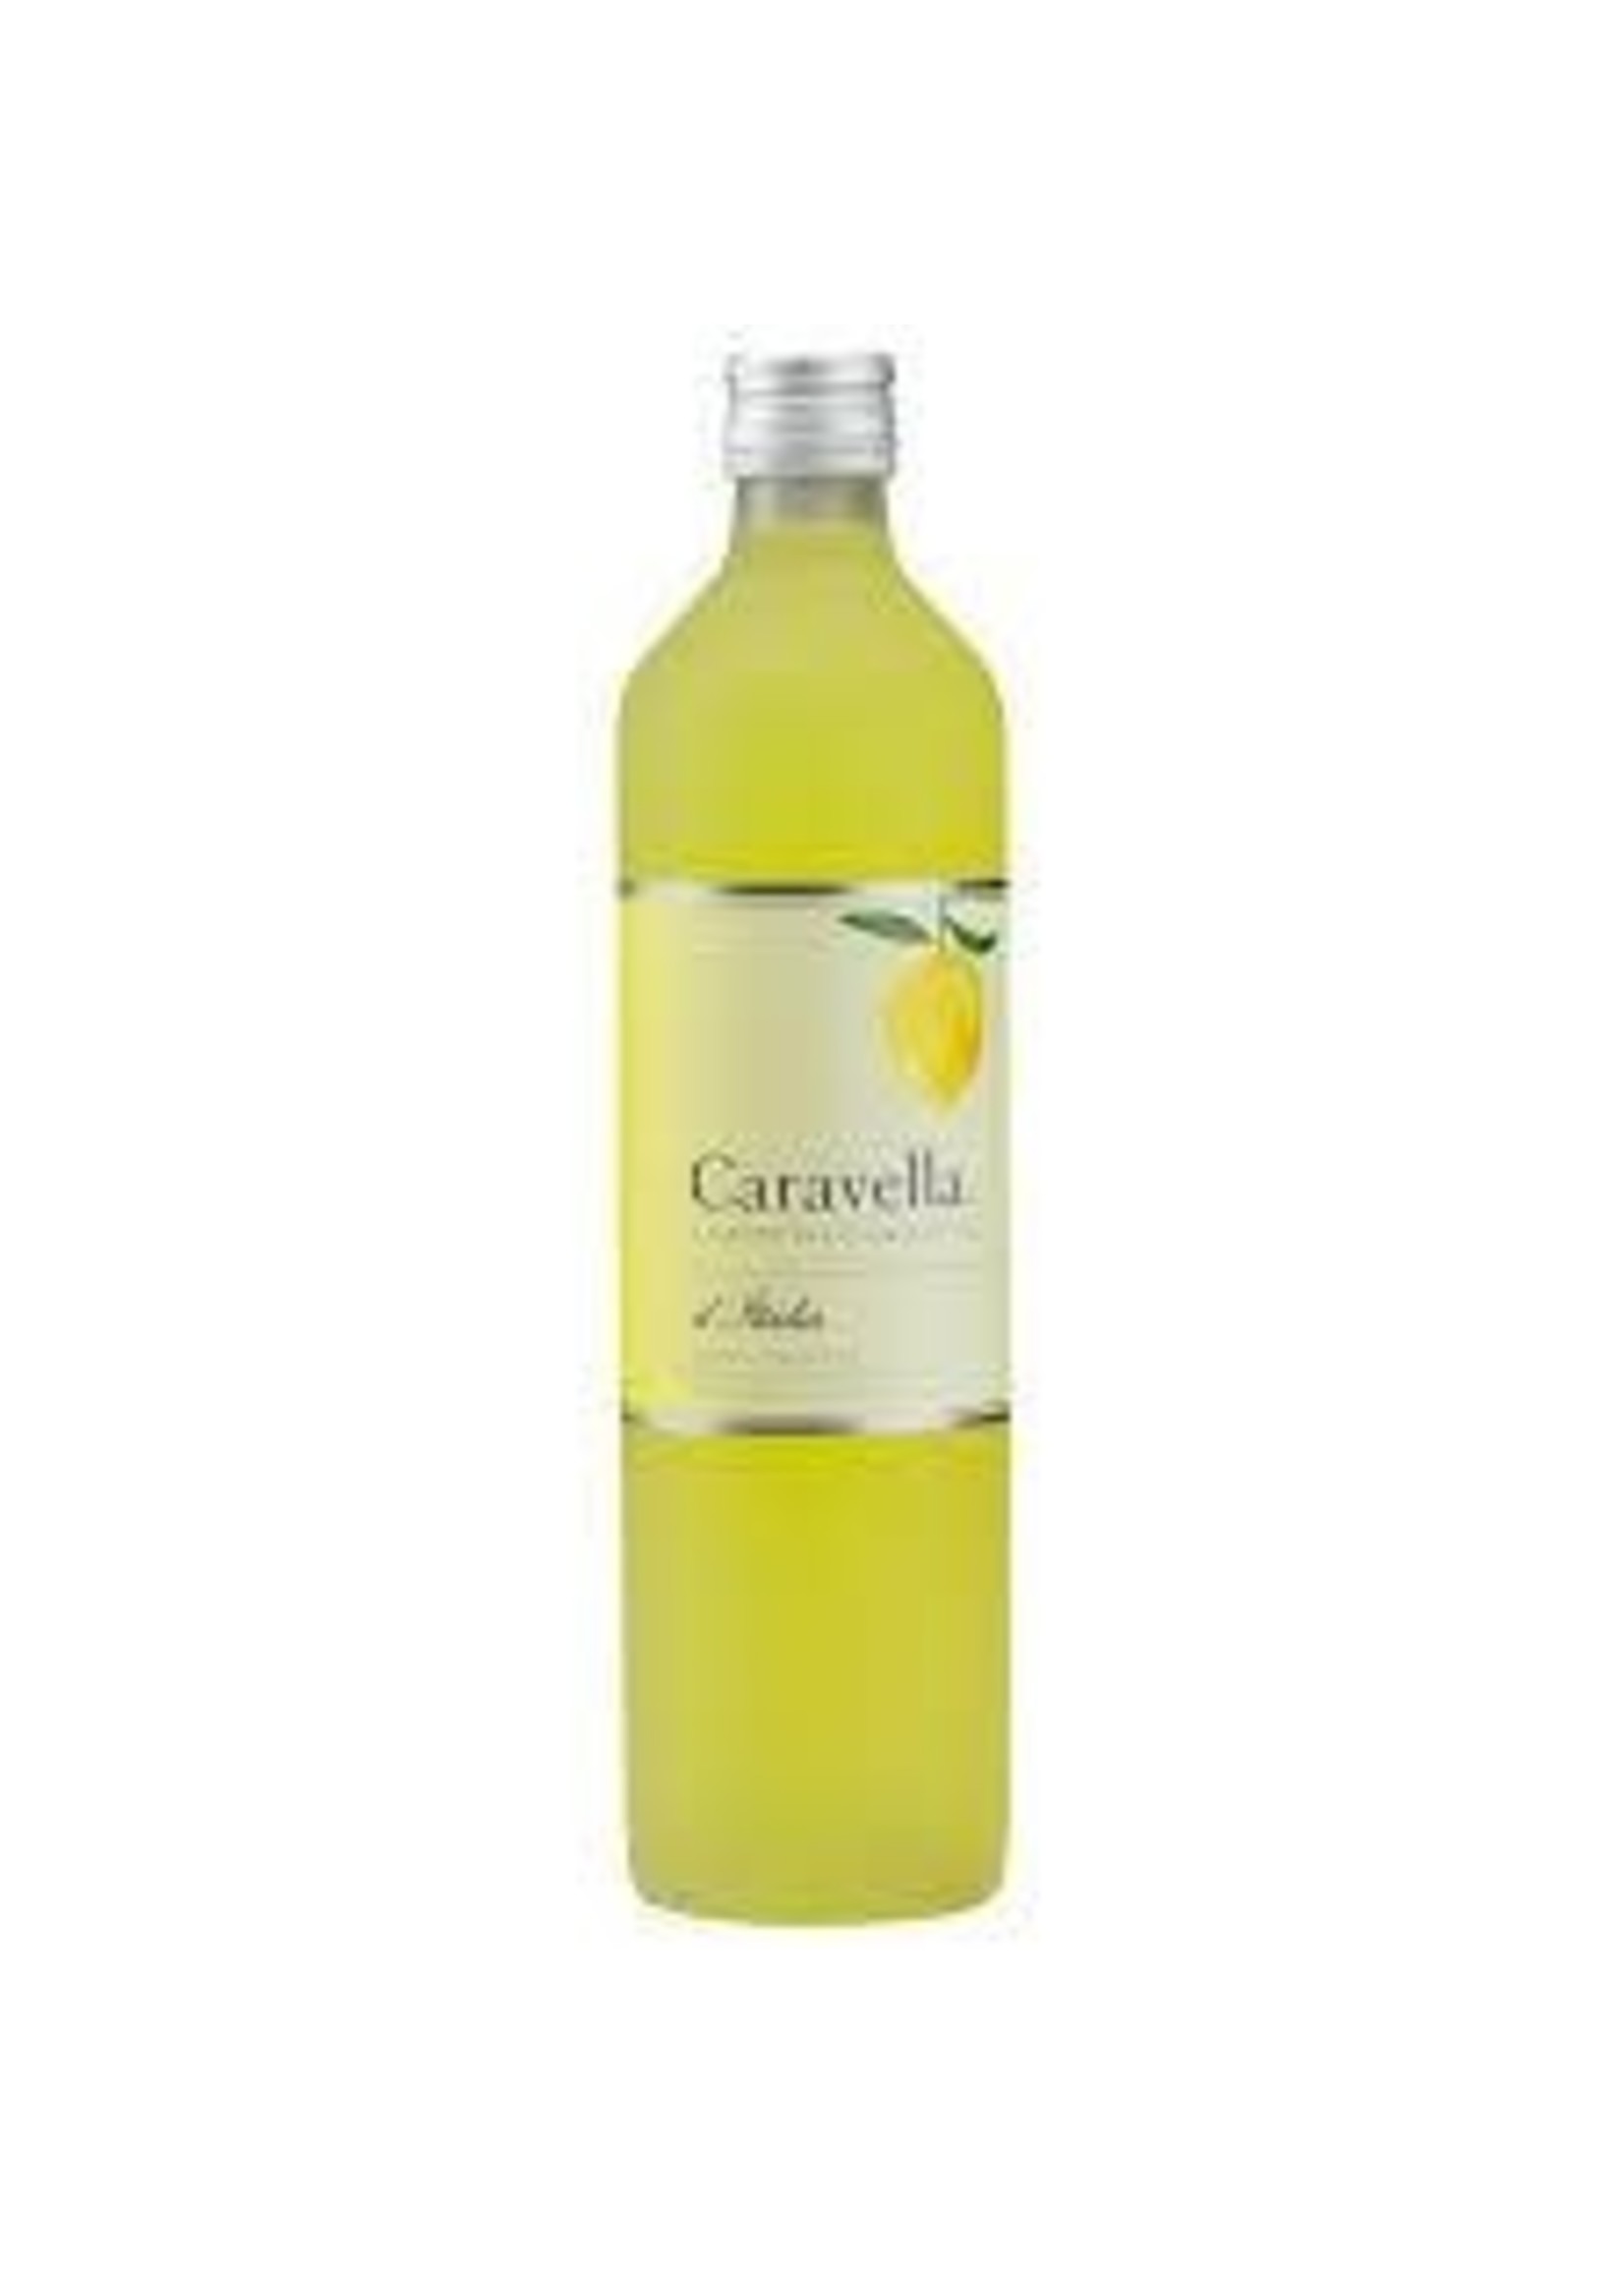 Caravella Caravella / Lemoncello / 750mL